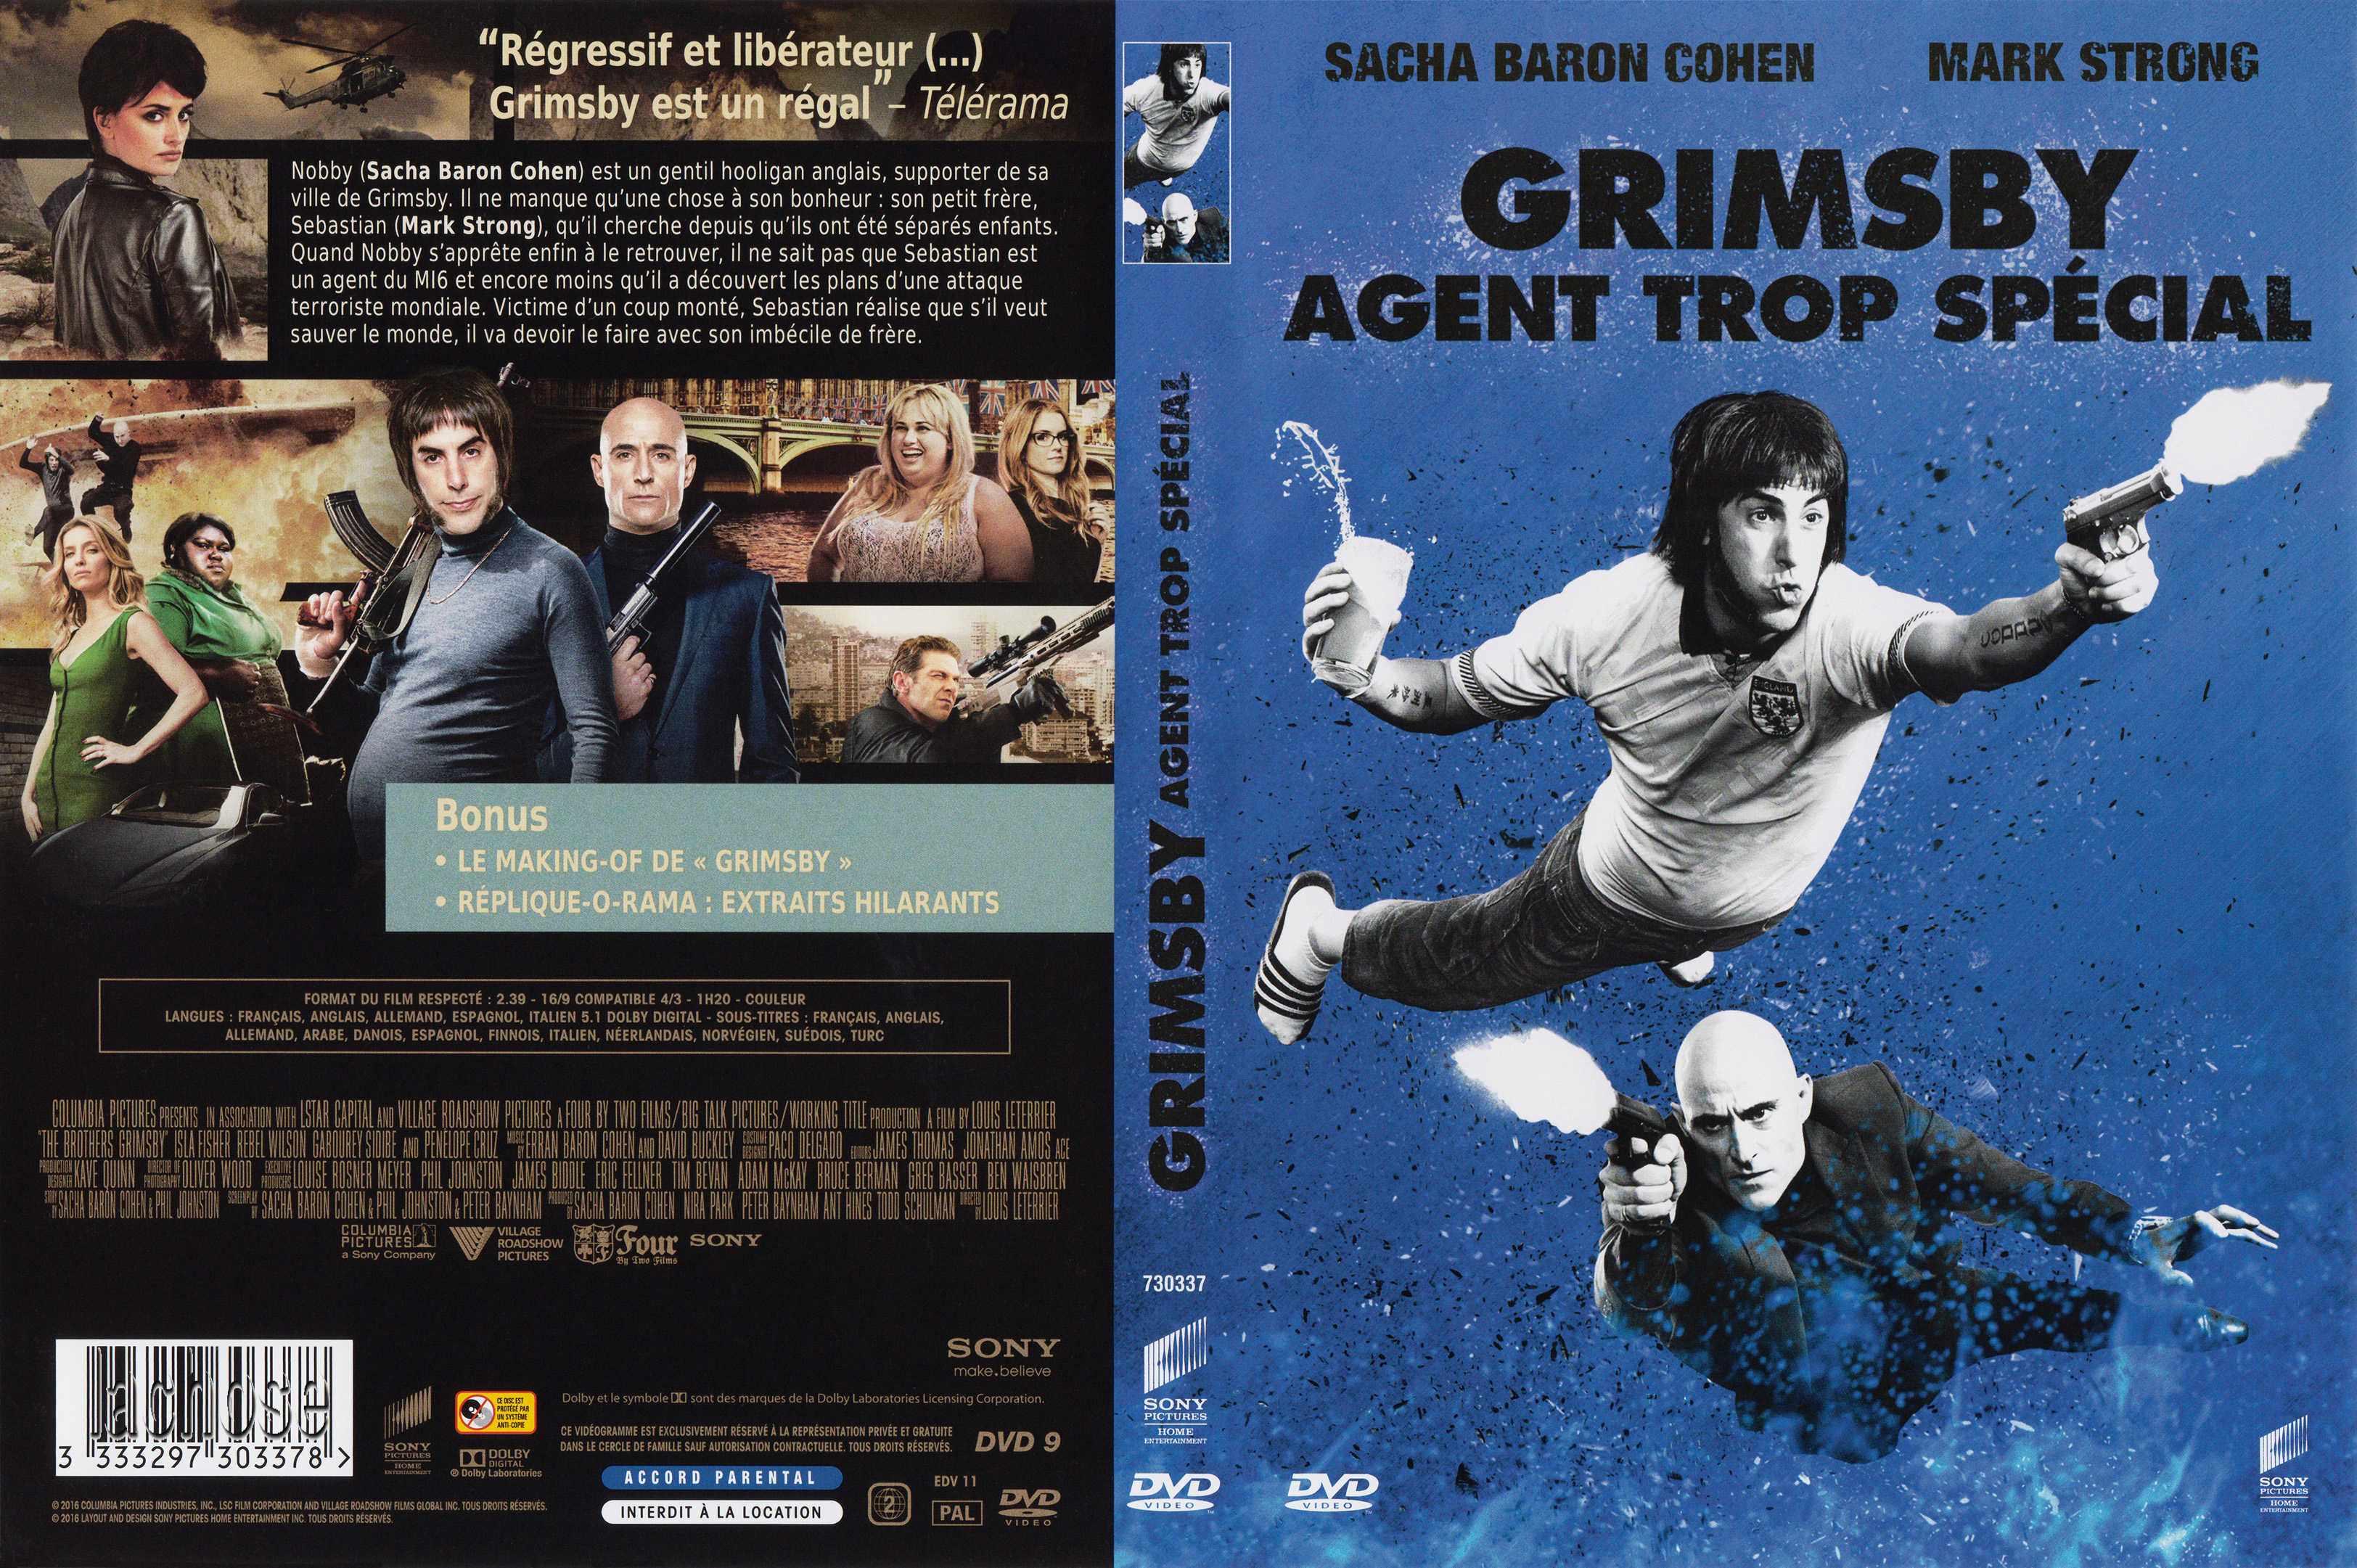 Jaquette DVD Grimsby Agent trop spcial v2